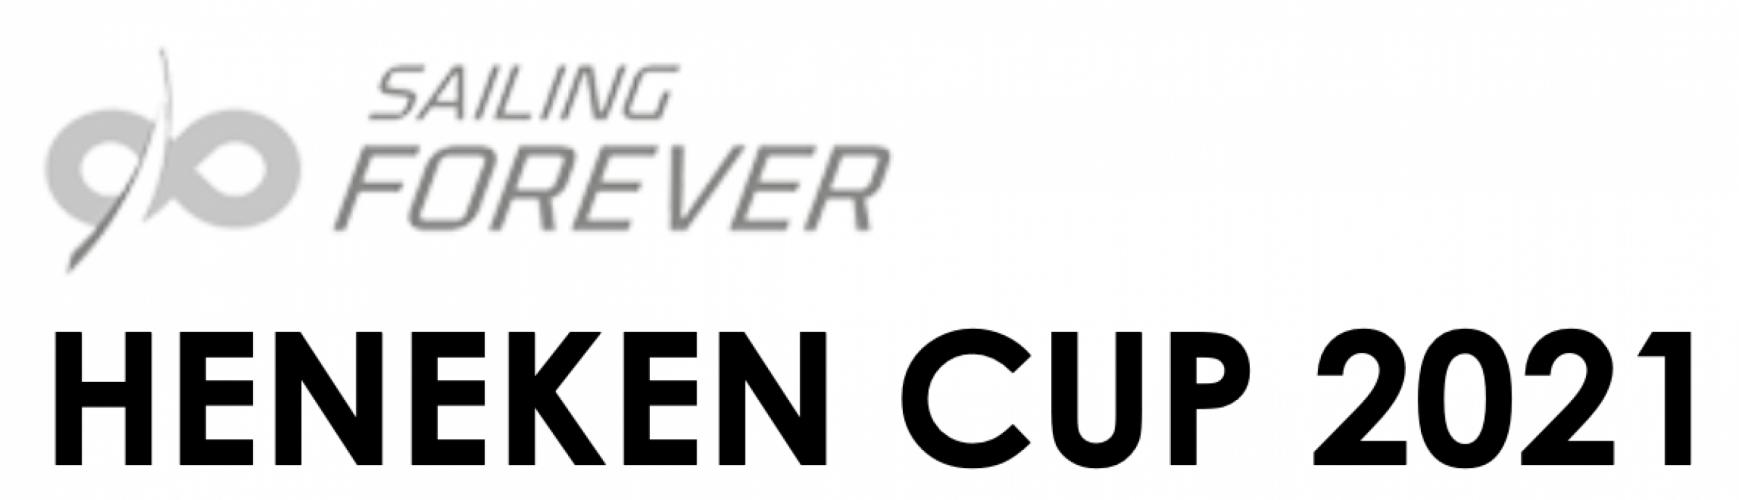 Pozvánka na HENEKEN CUP 2021